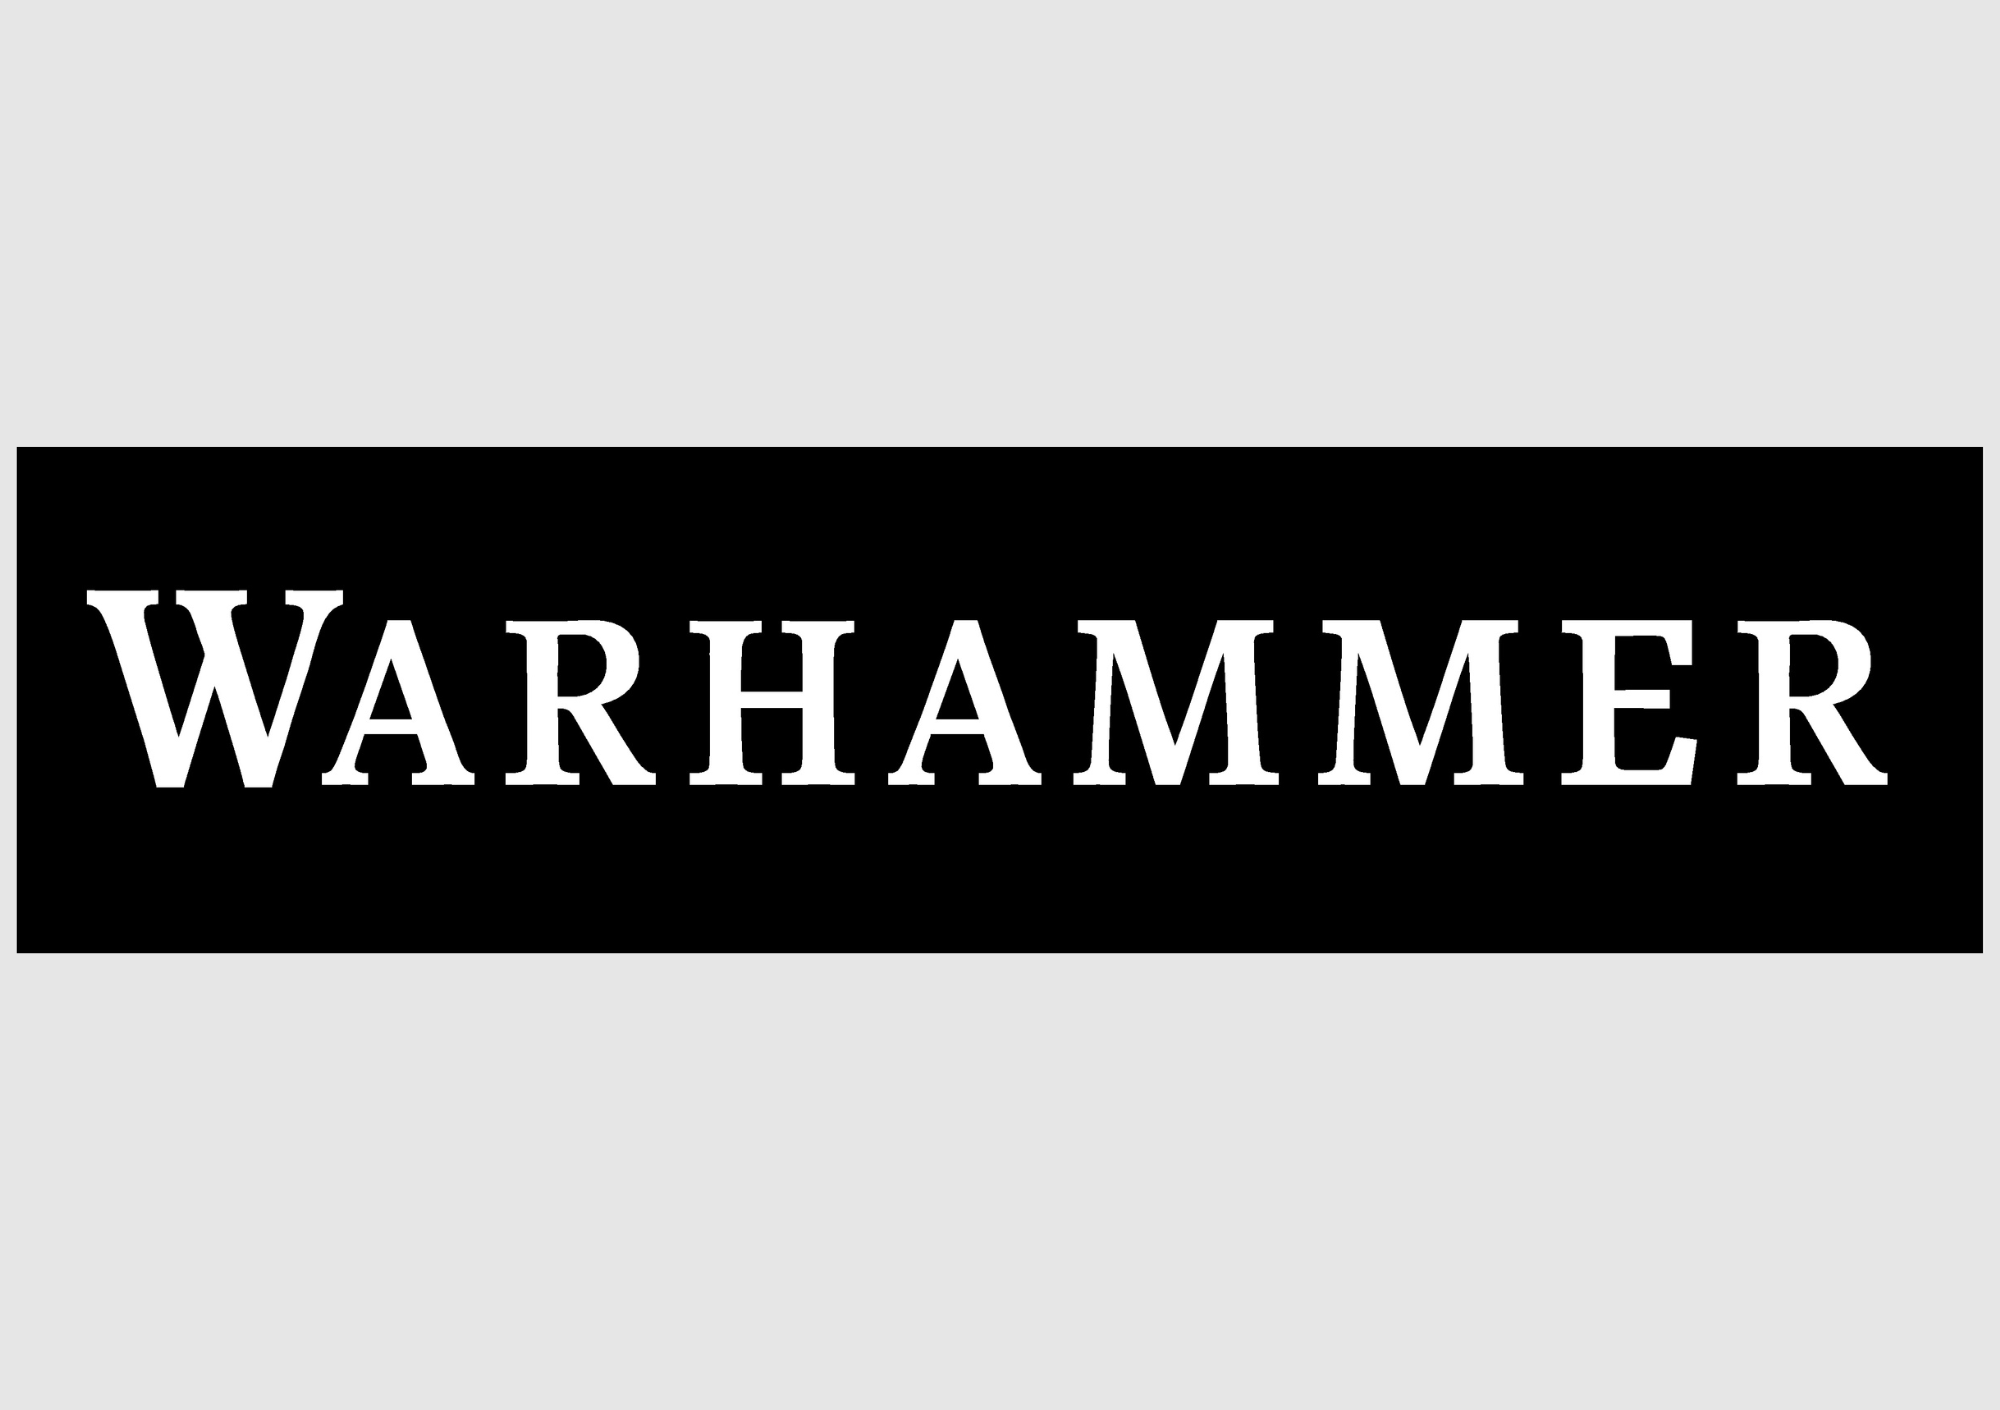 https://www.mallcribbs.com/media/220bdh2e/warhammer-logo-new.png